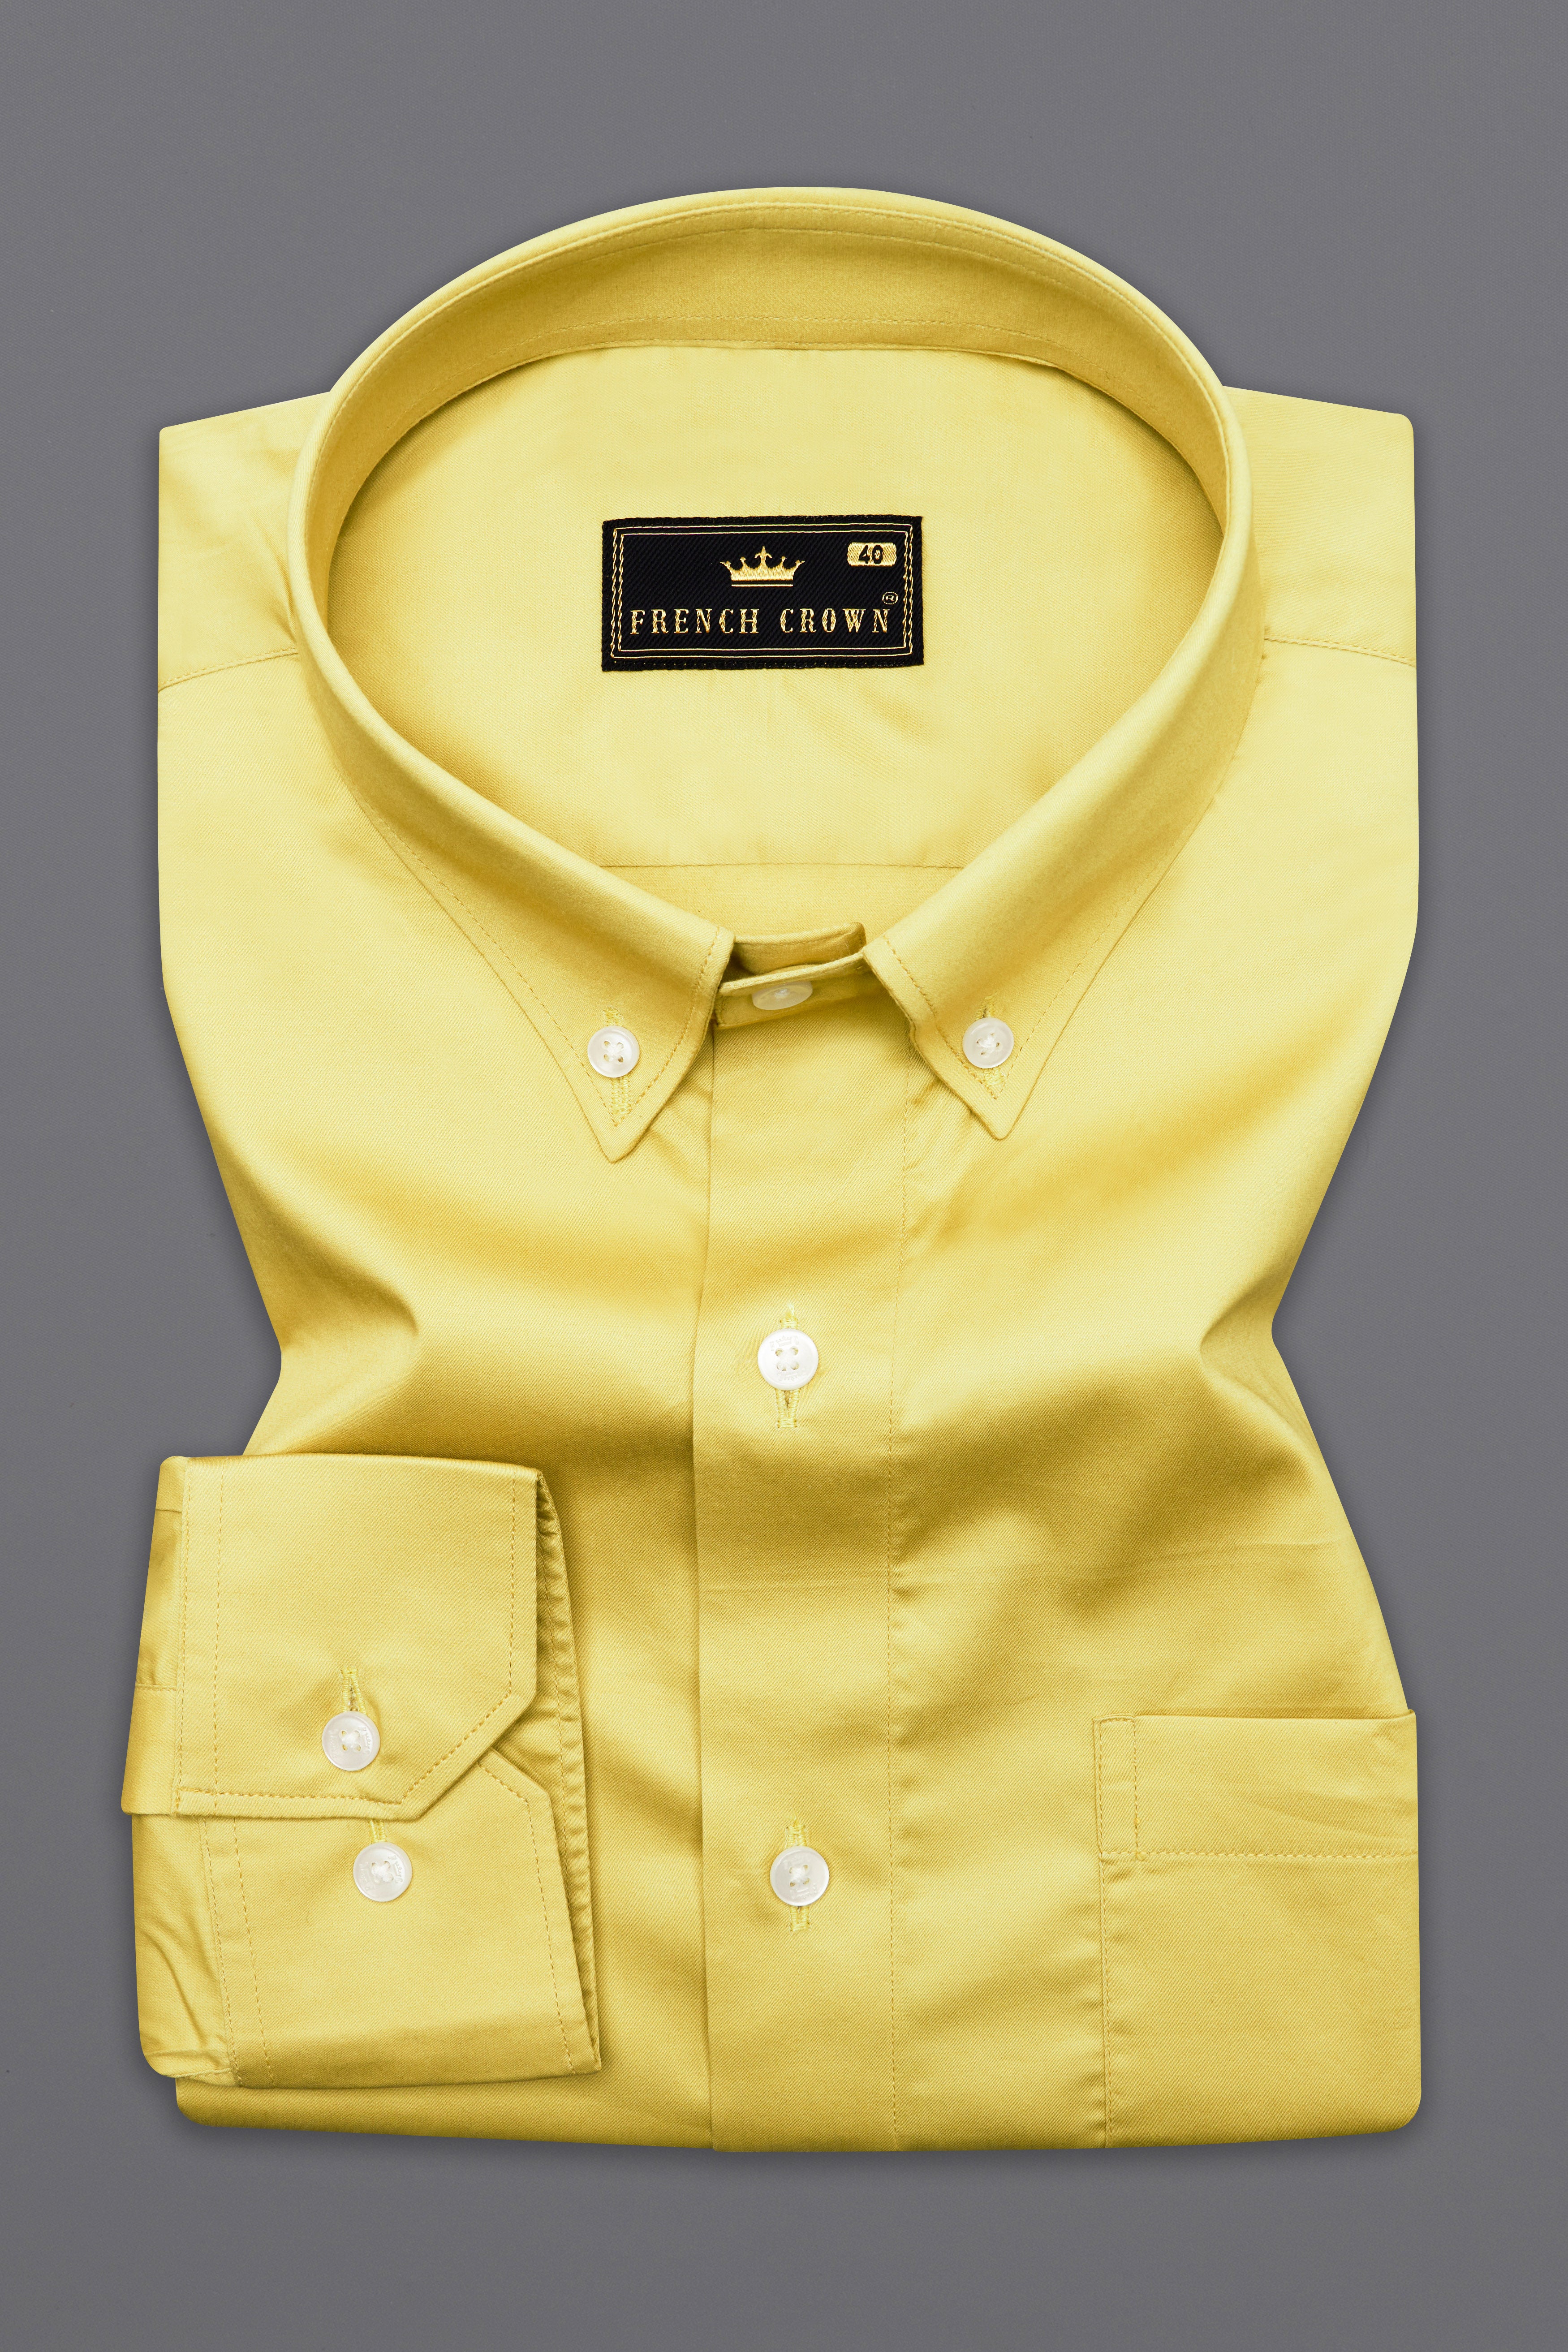 Chenin yellow Super Soft Premium Cotton Shirt